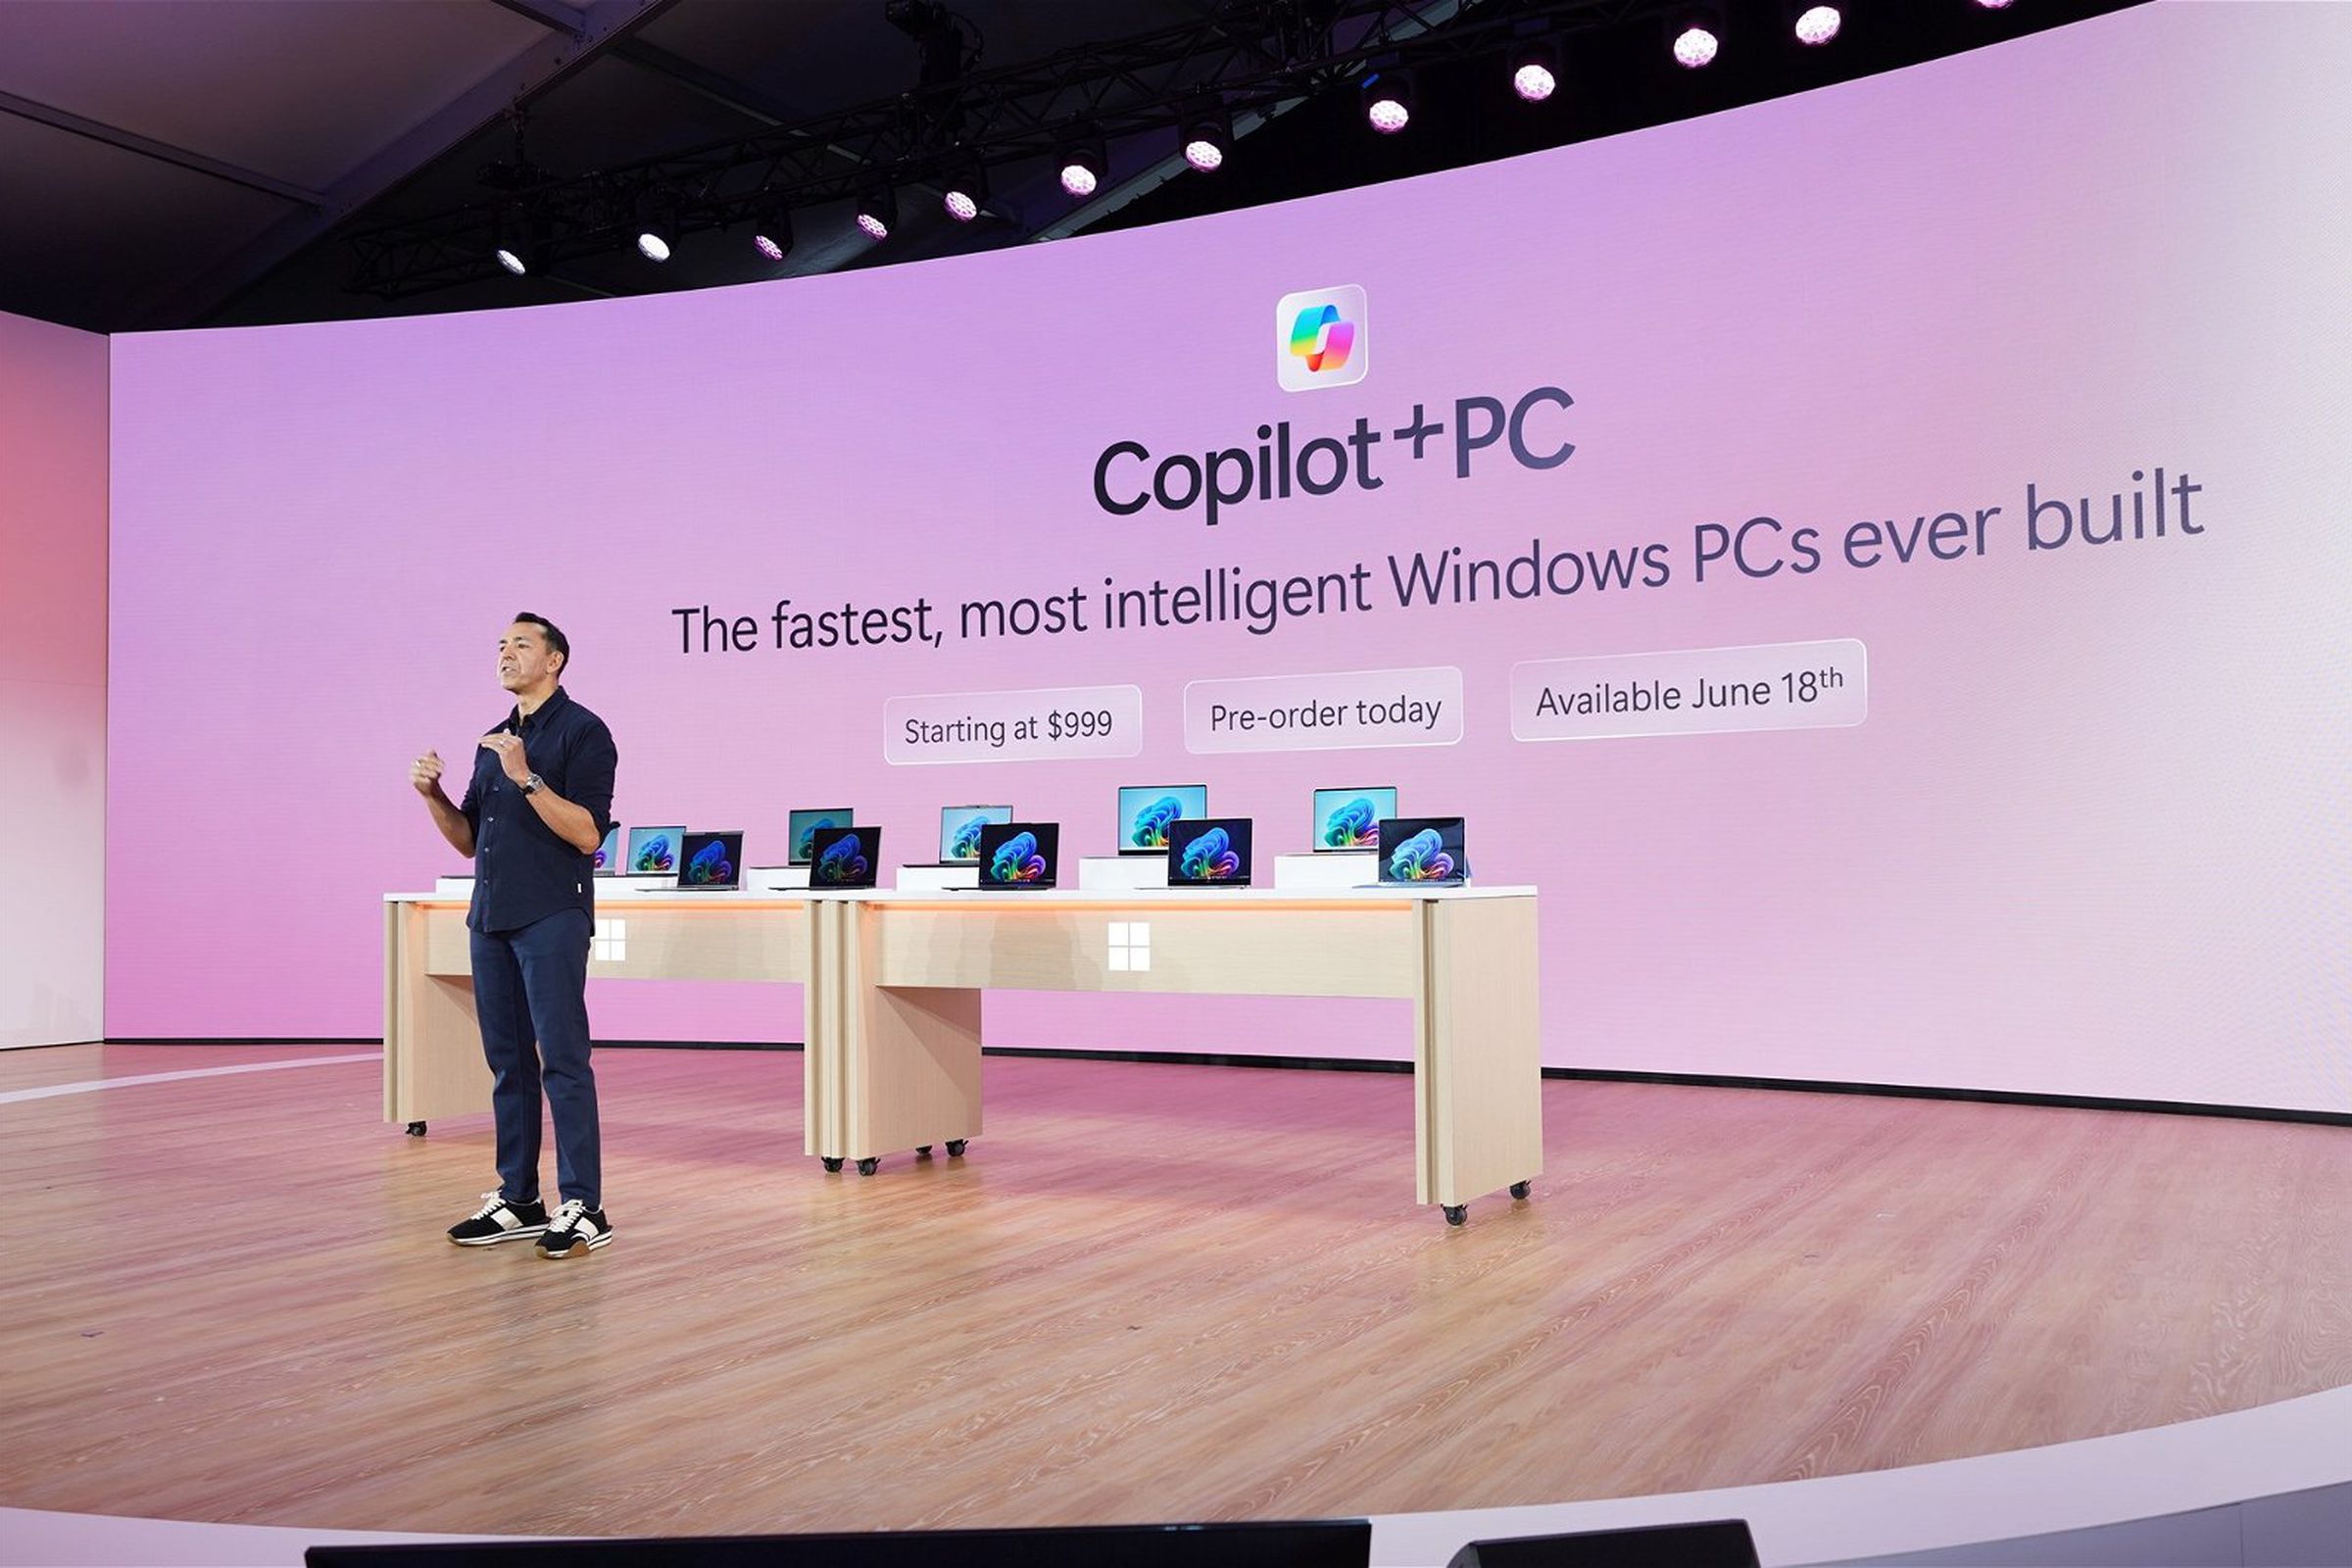 The Copilot Plus PCs announced during Microsoft’s Surface event.